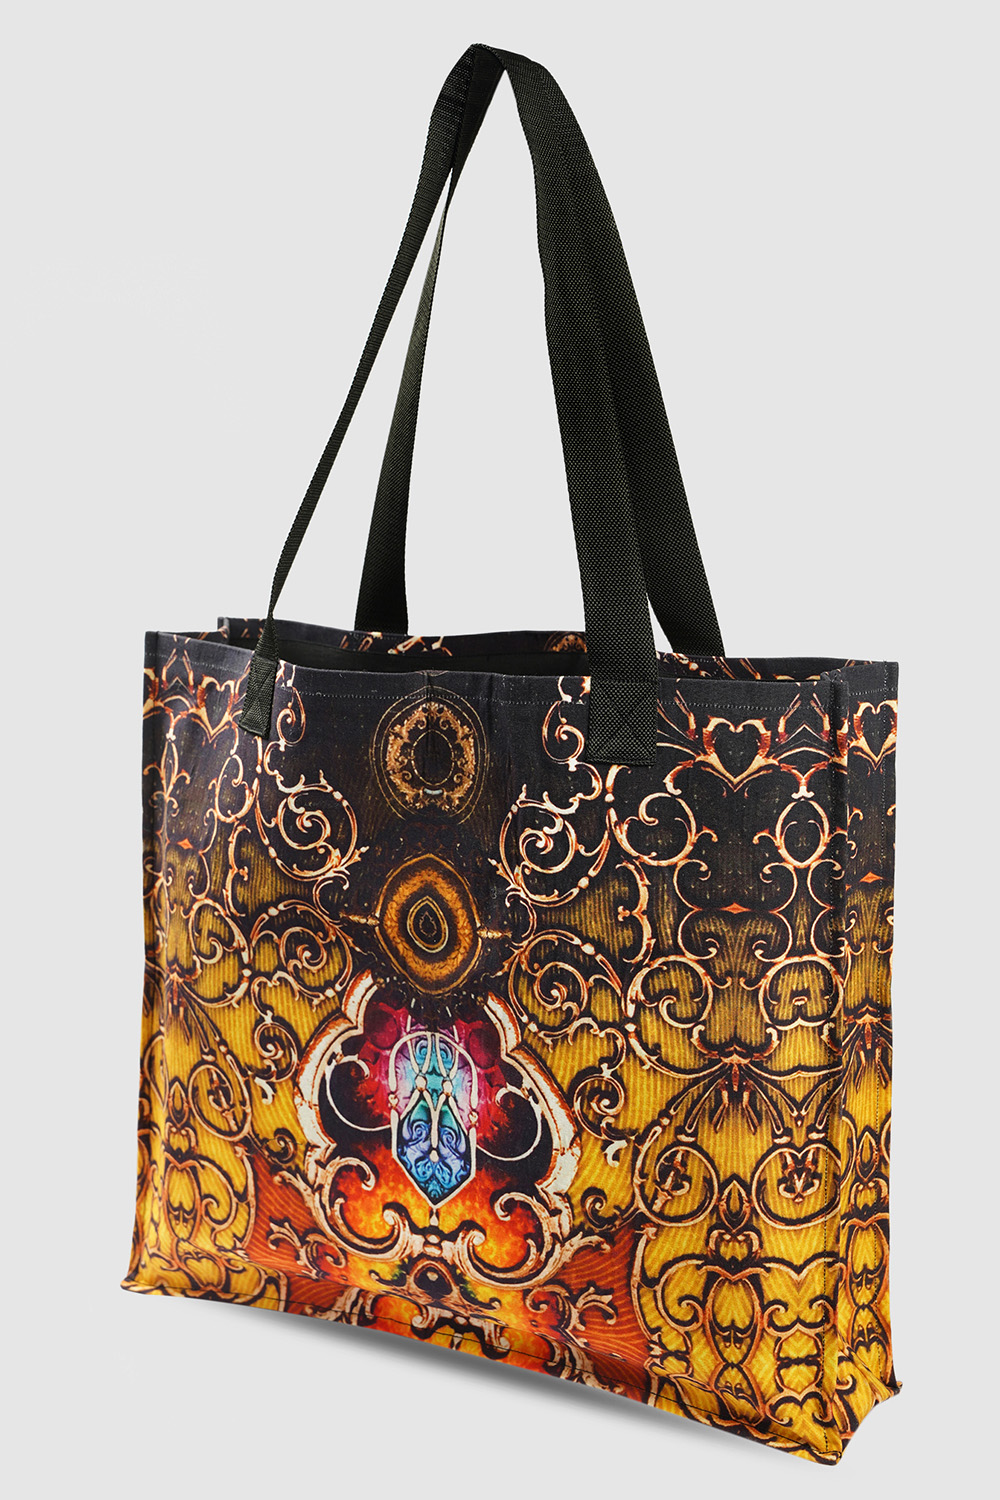 Black And Orange Tribal Print Tote Bag